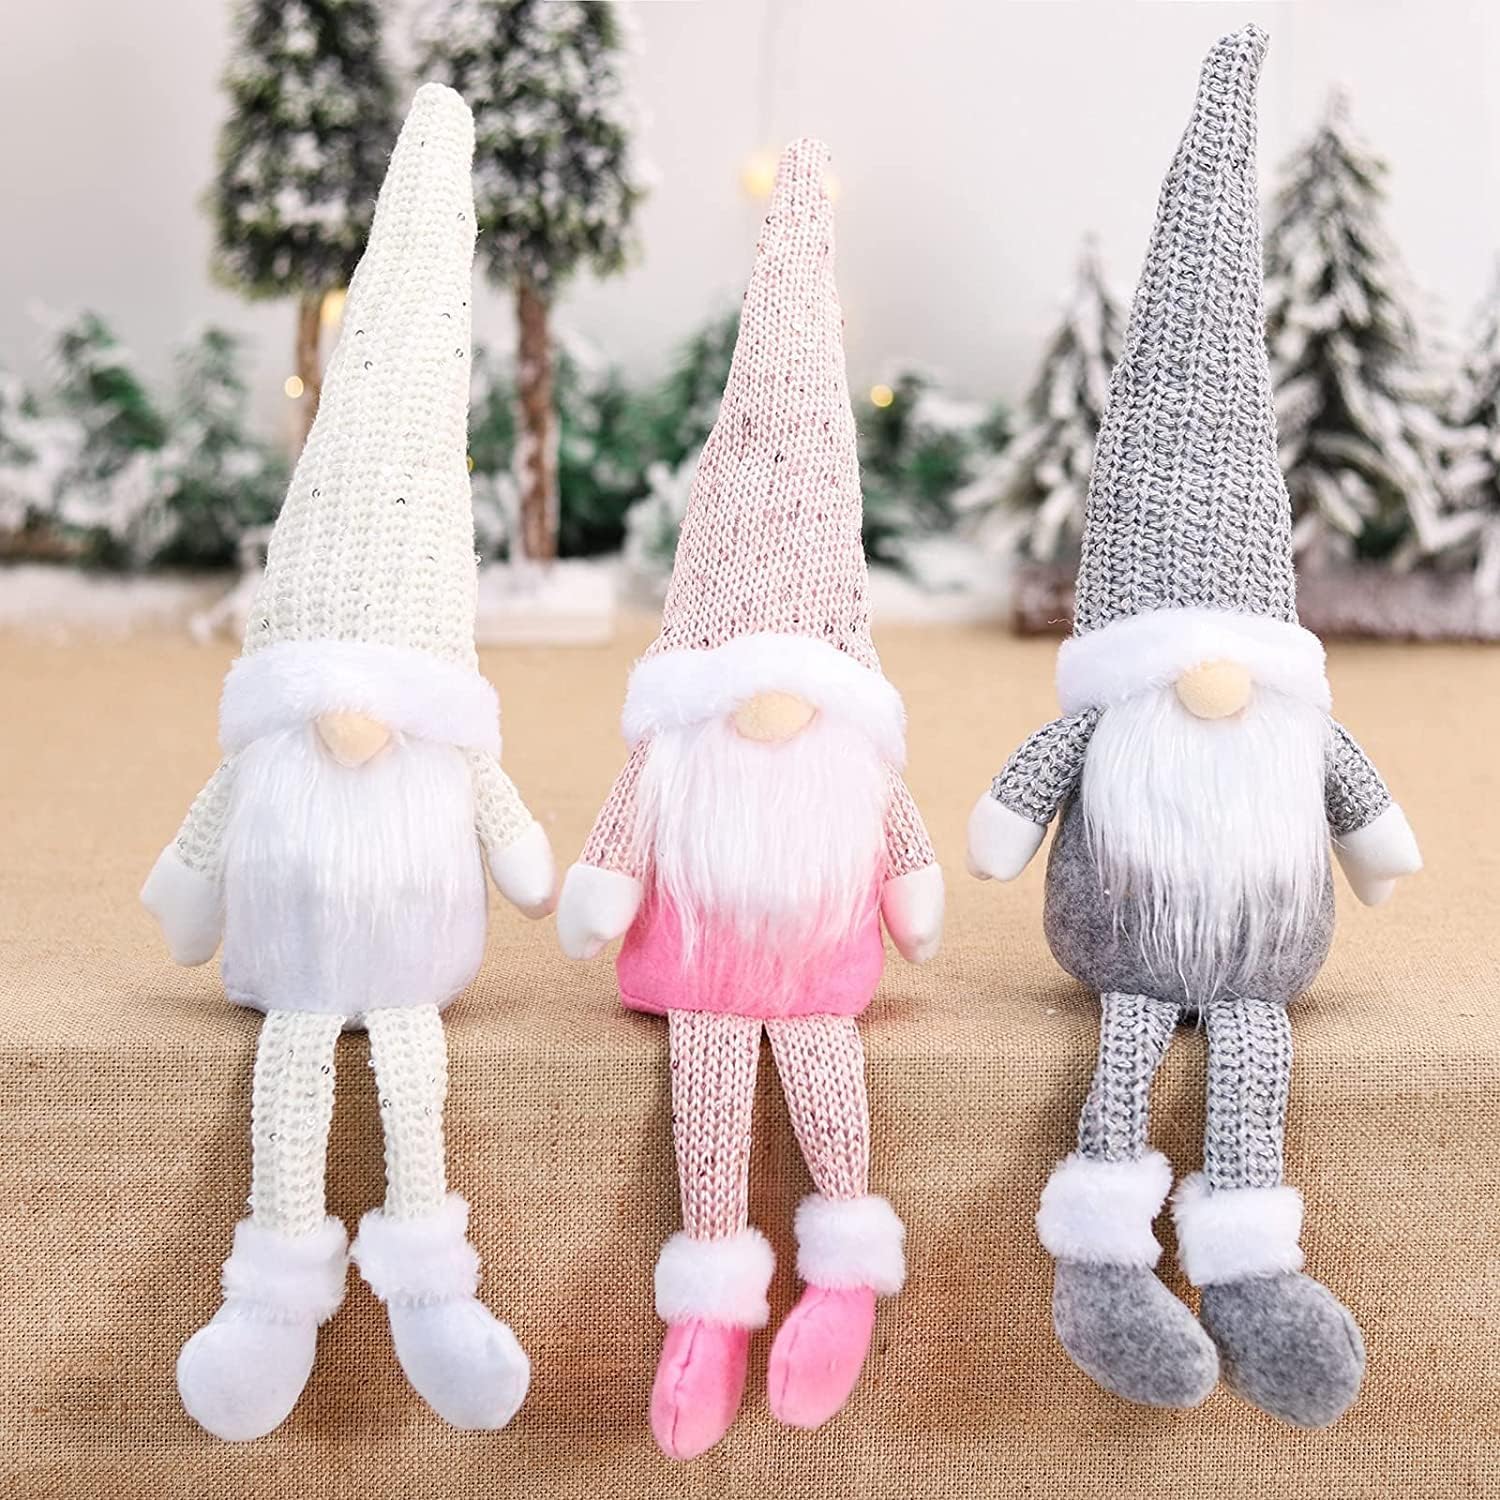 3Pcs Christmas Plush Figurines, 3 Colors Handmade Swedish Tomte Gnome Plush Scandinavian Santa Elf Long Legs Figurine for Christmas Table Fireplace Home Decor (46cm x 16cm)